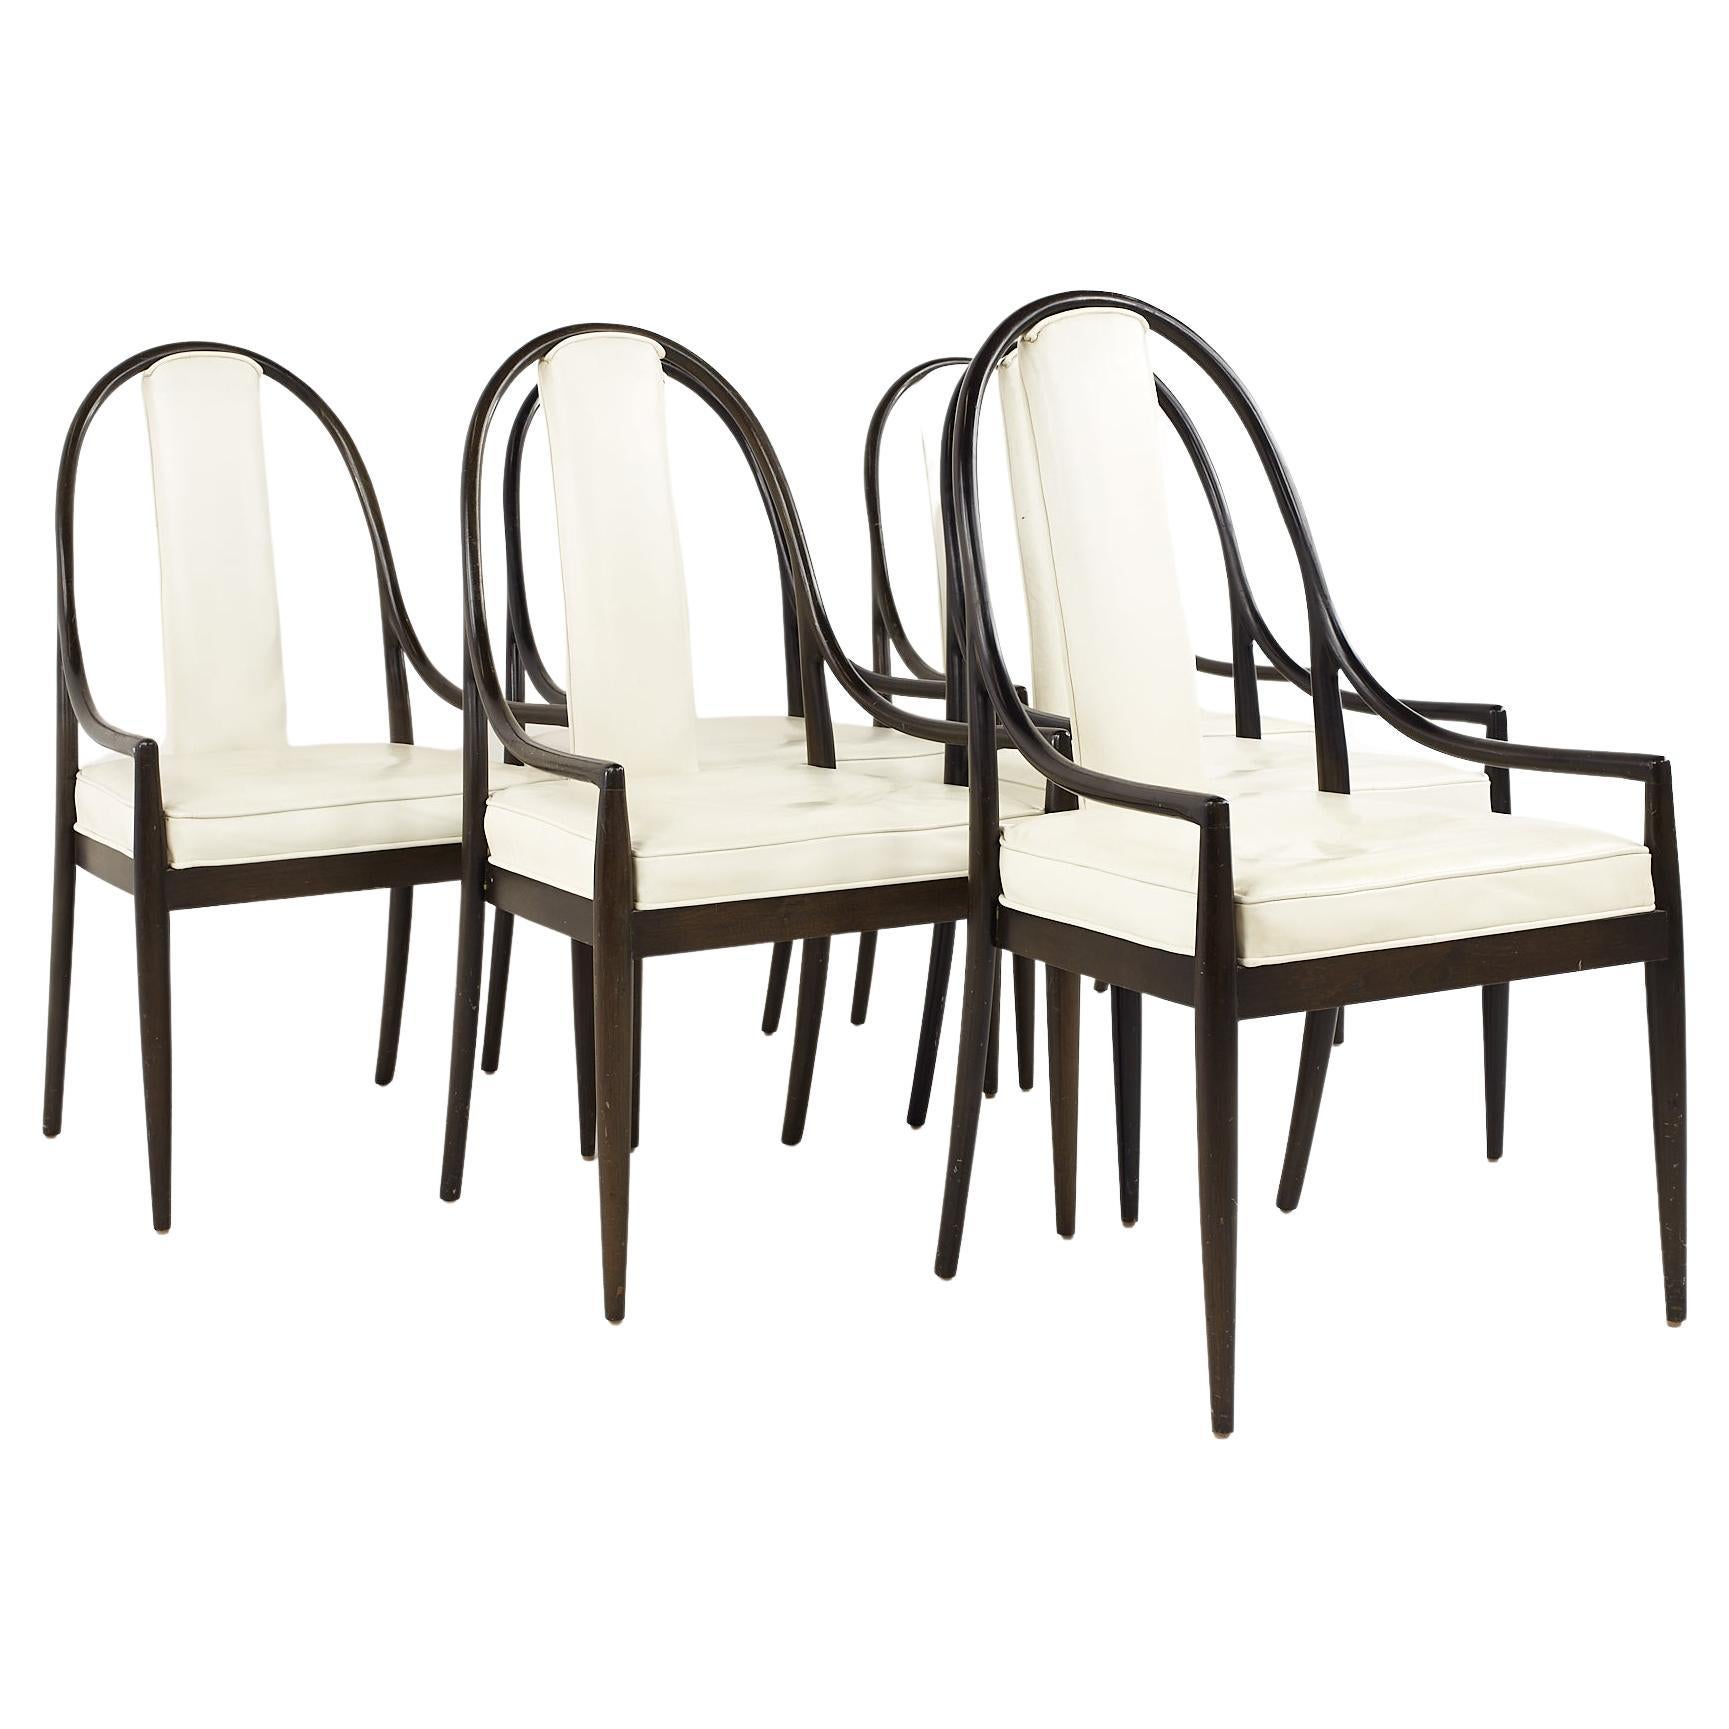 Gerry Zanck for Gregori Mid-Century Ebonized Walnut Dining Chairs, Set of 6 For Sale